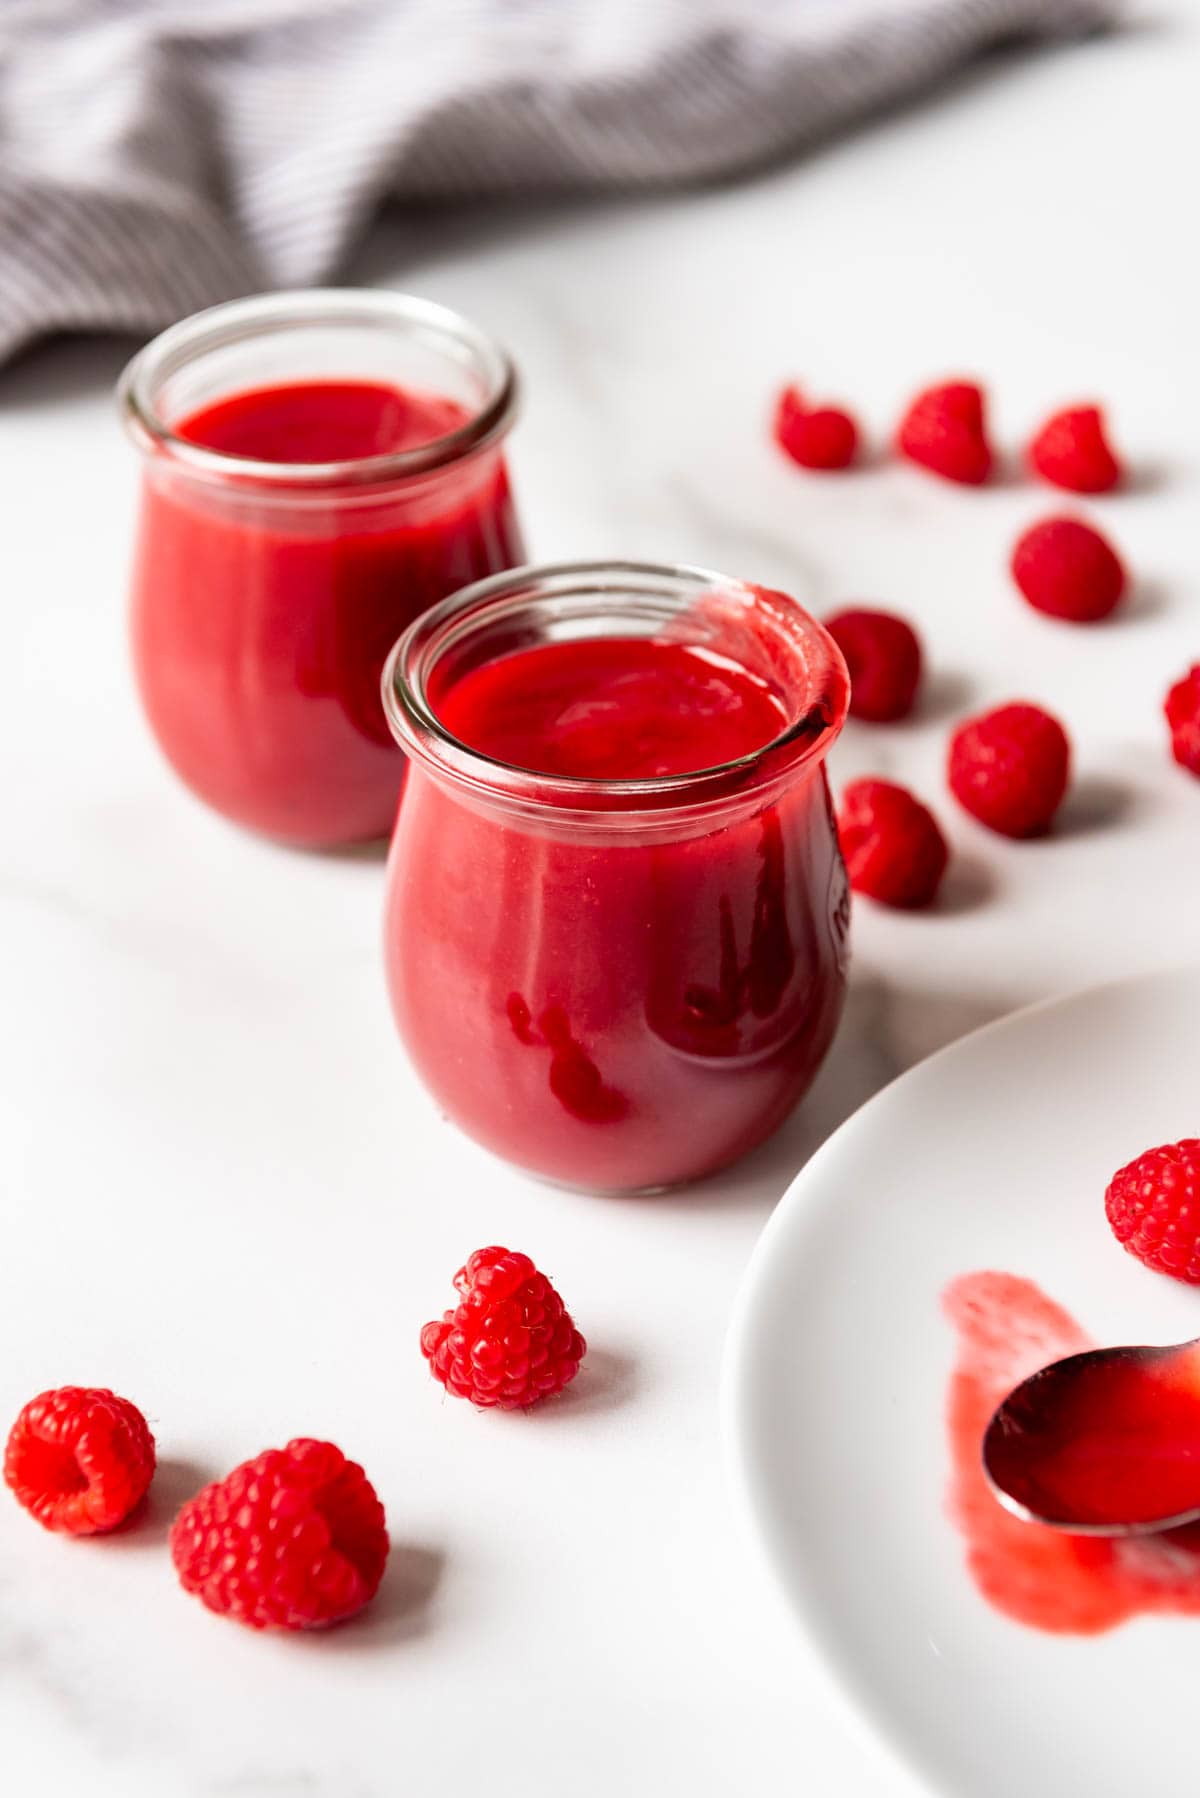 An image of a dessert fruit sauce in glass jars.